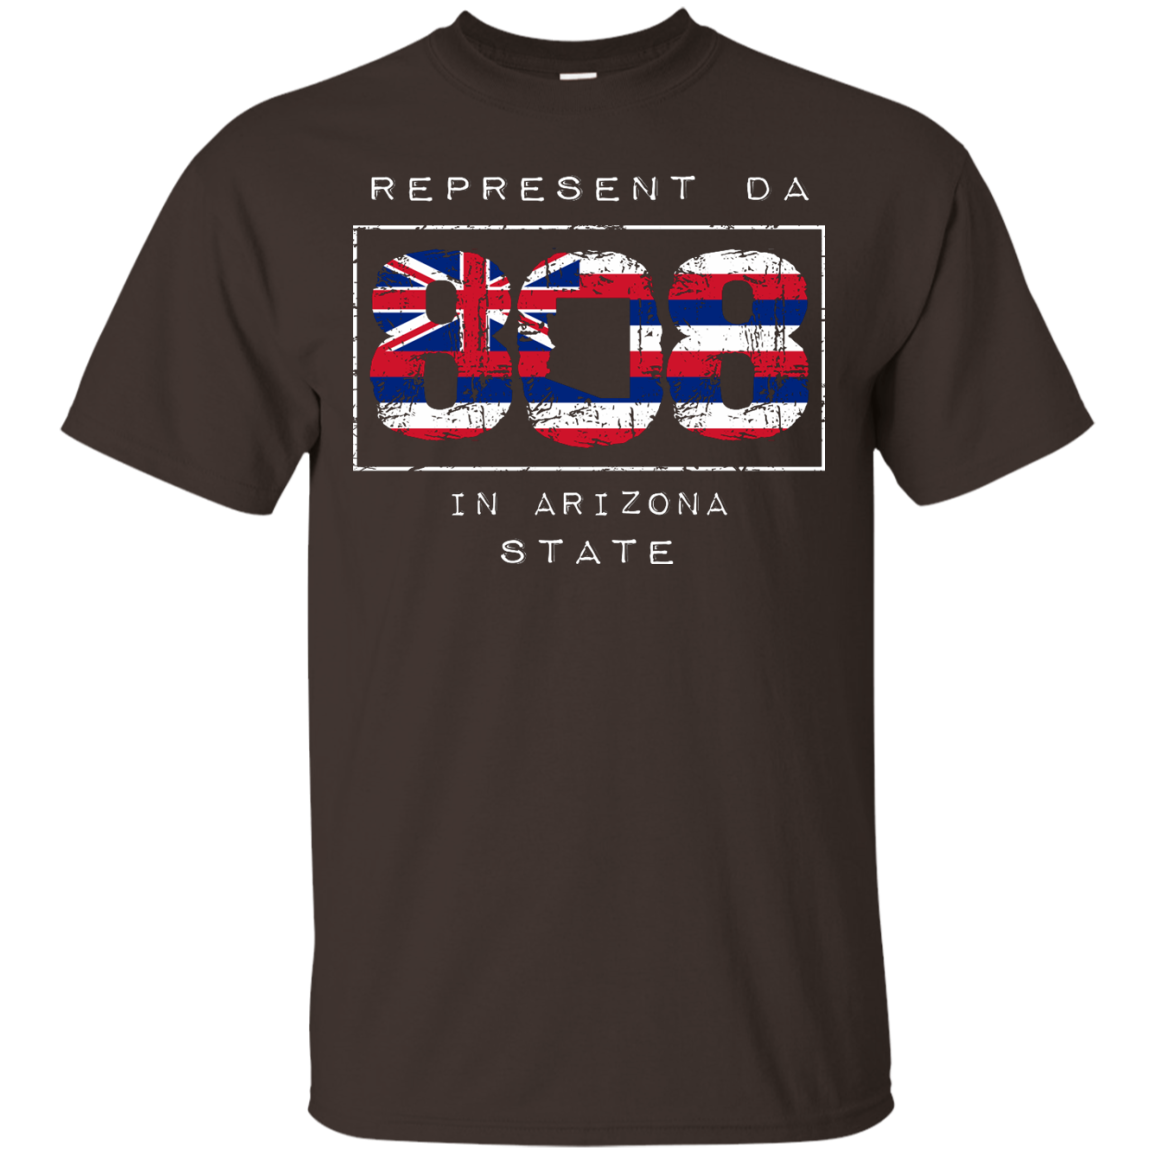 Represent Da 808 In Arizona State Ultra Cotton T-Shirt, T-Shirts, Hawaii Nei All Day